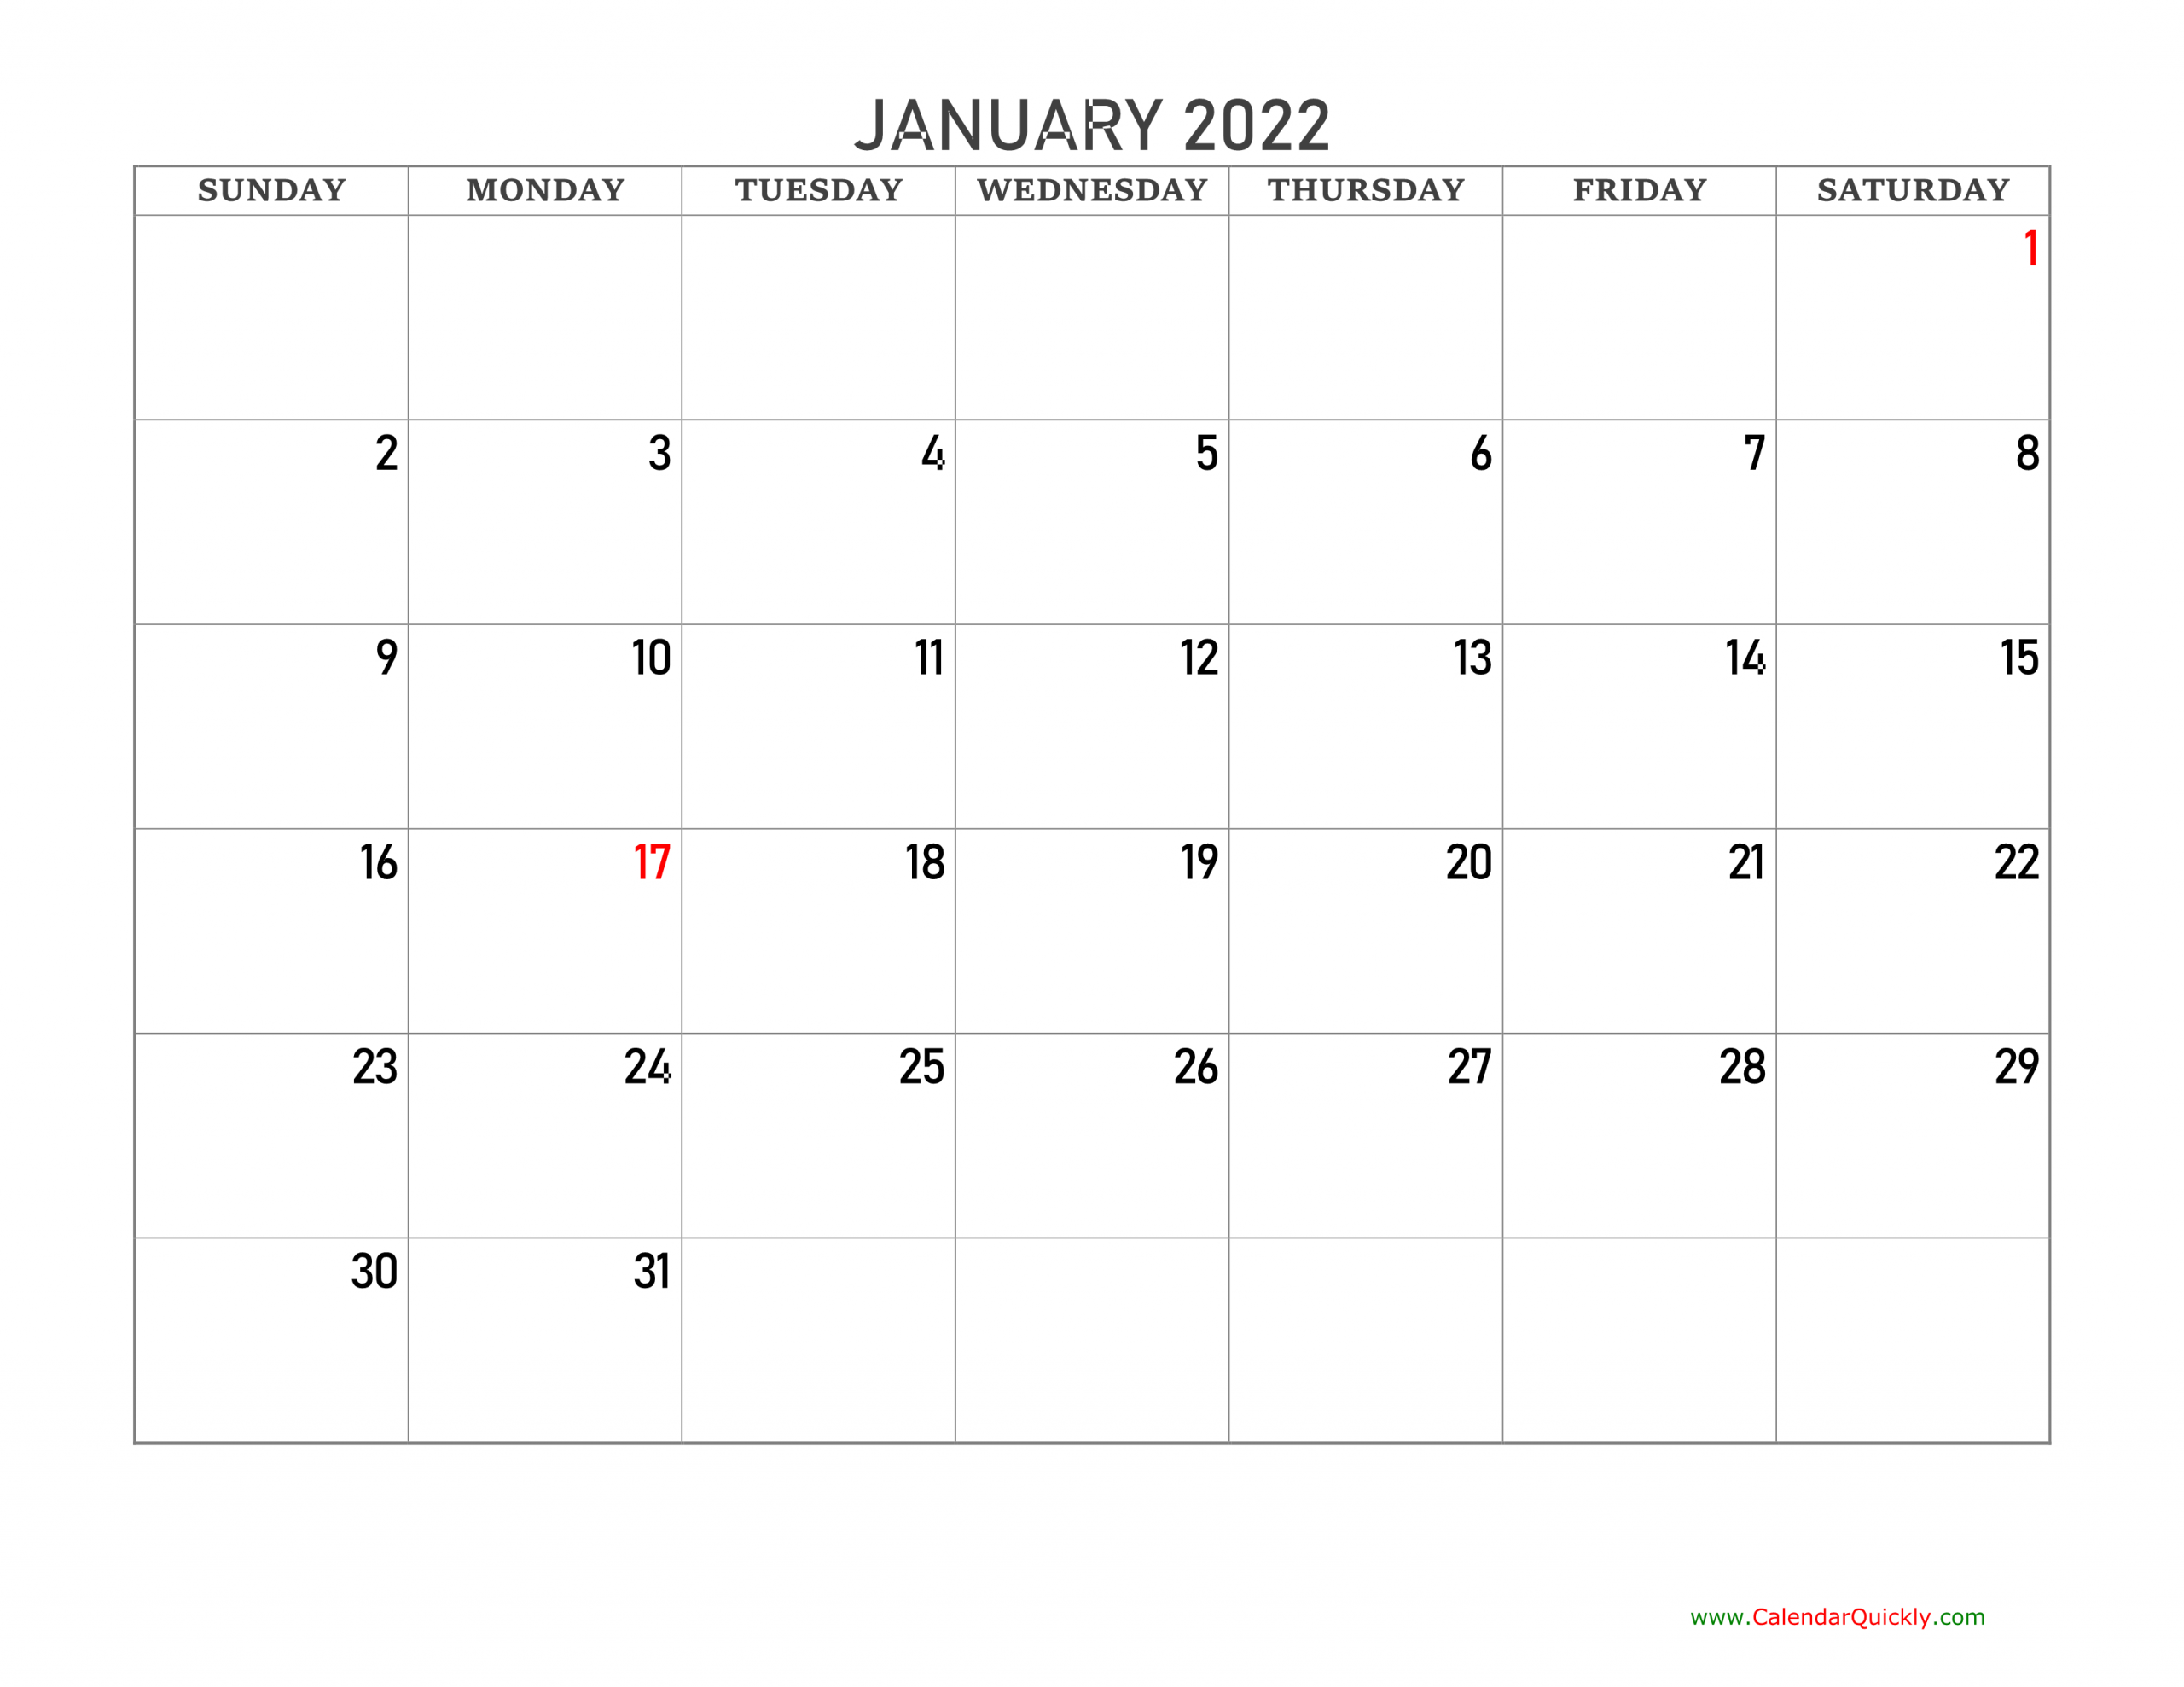 Monthly 2022 Blank Calendar | Calendar Quickly